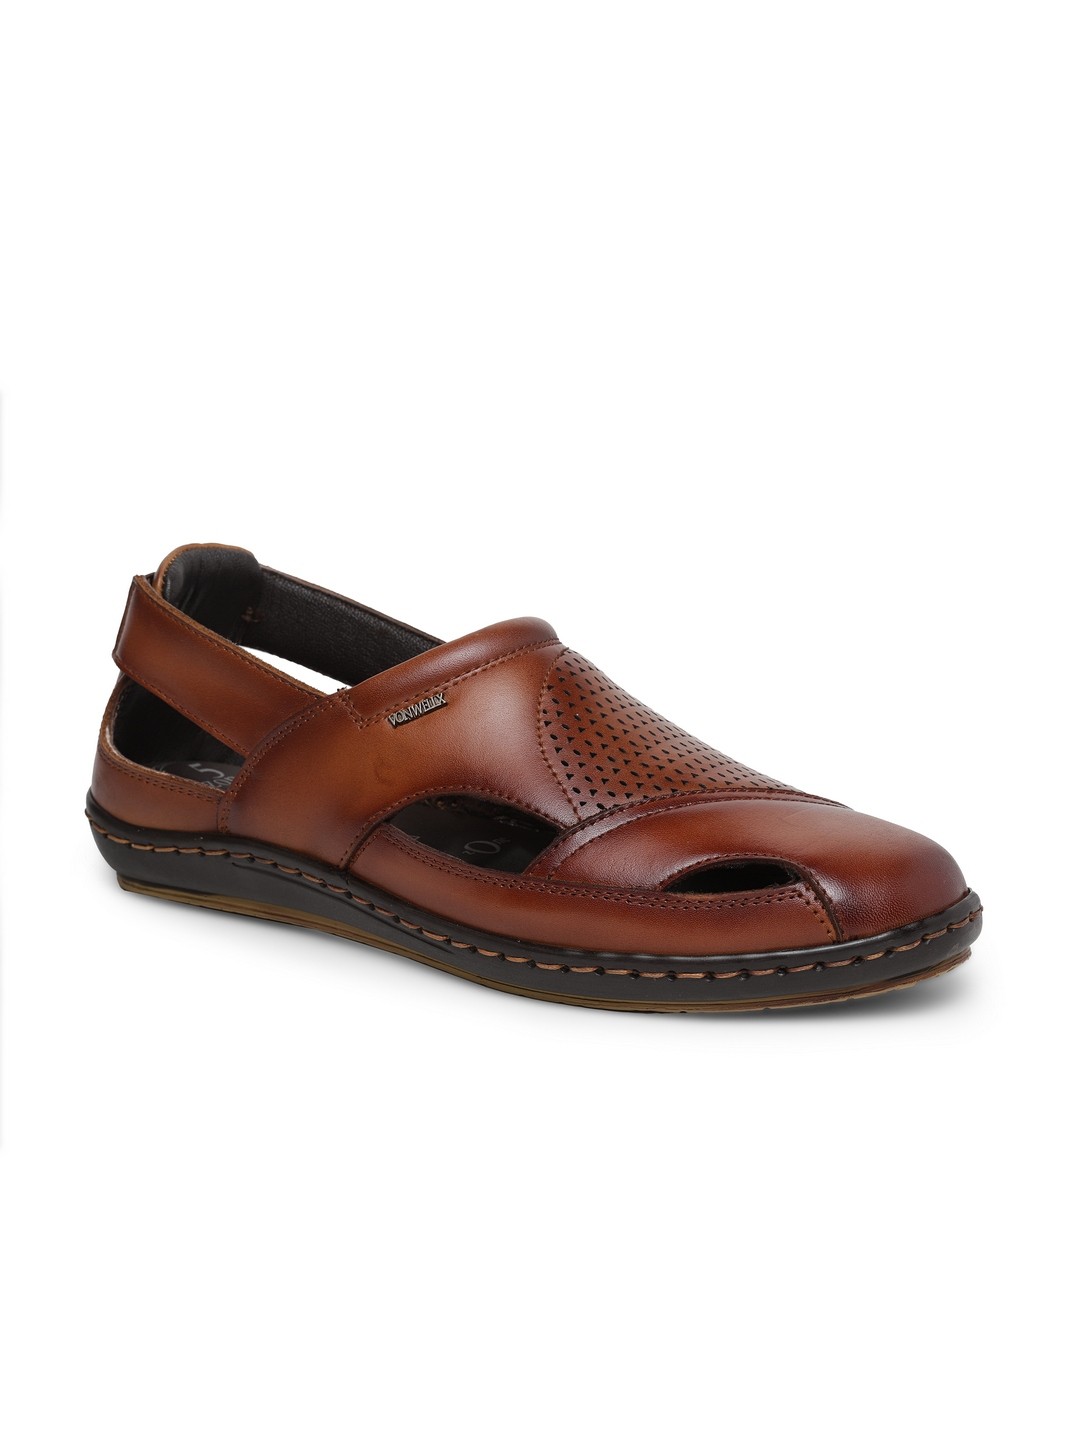 Buy Von Wellx Germany Comfort Men's Tan Sandal Eddie Online in West Bengal